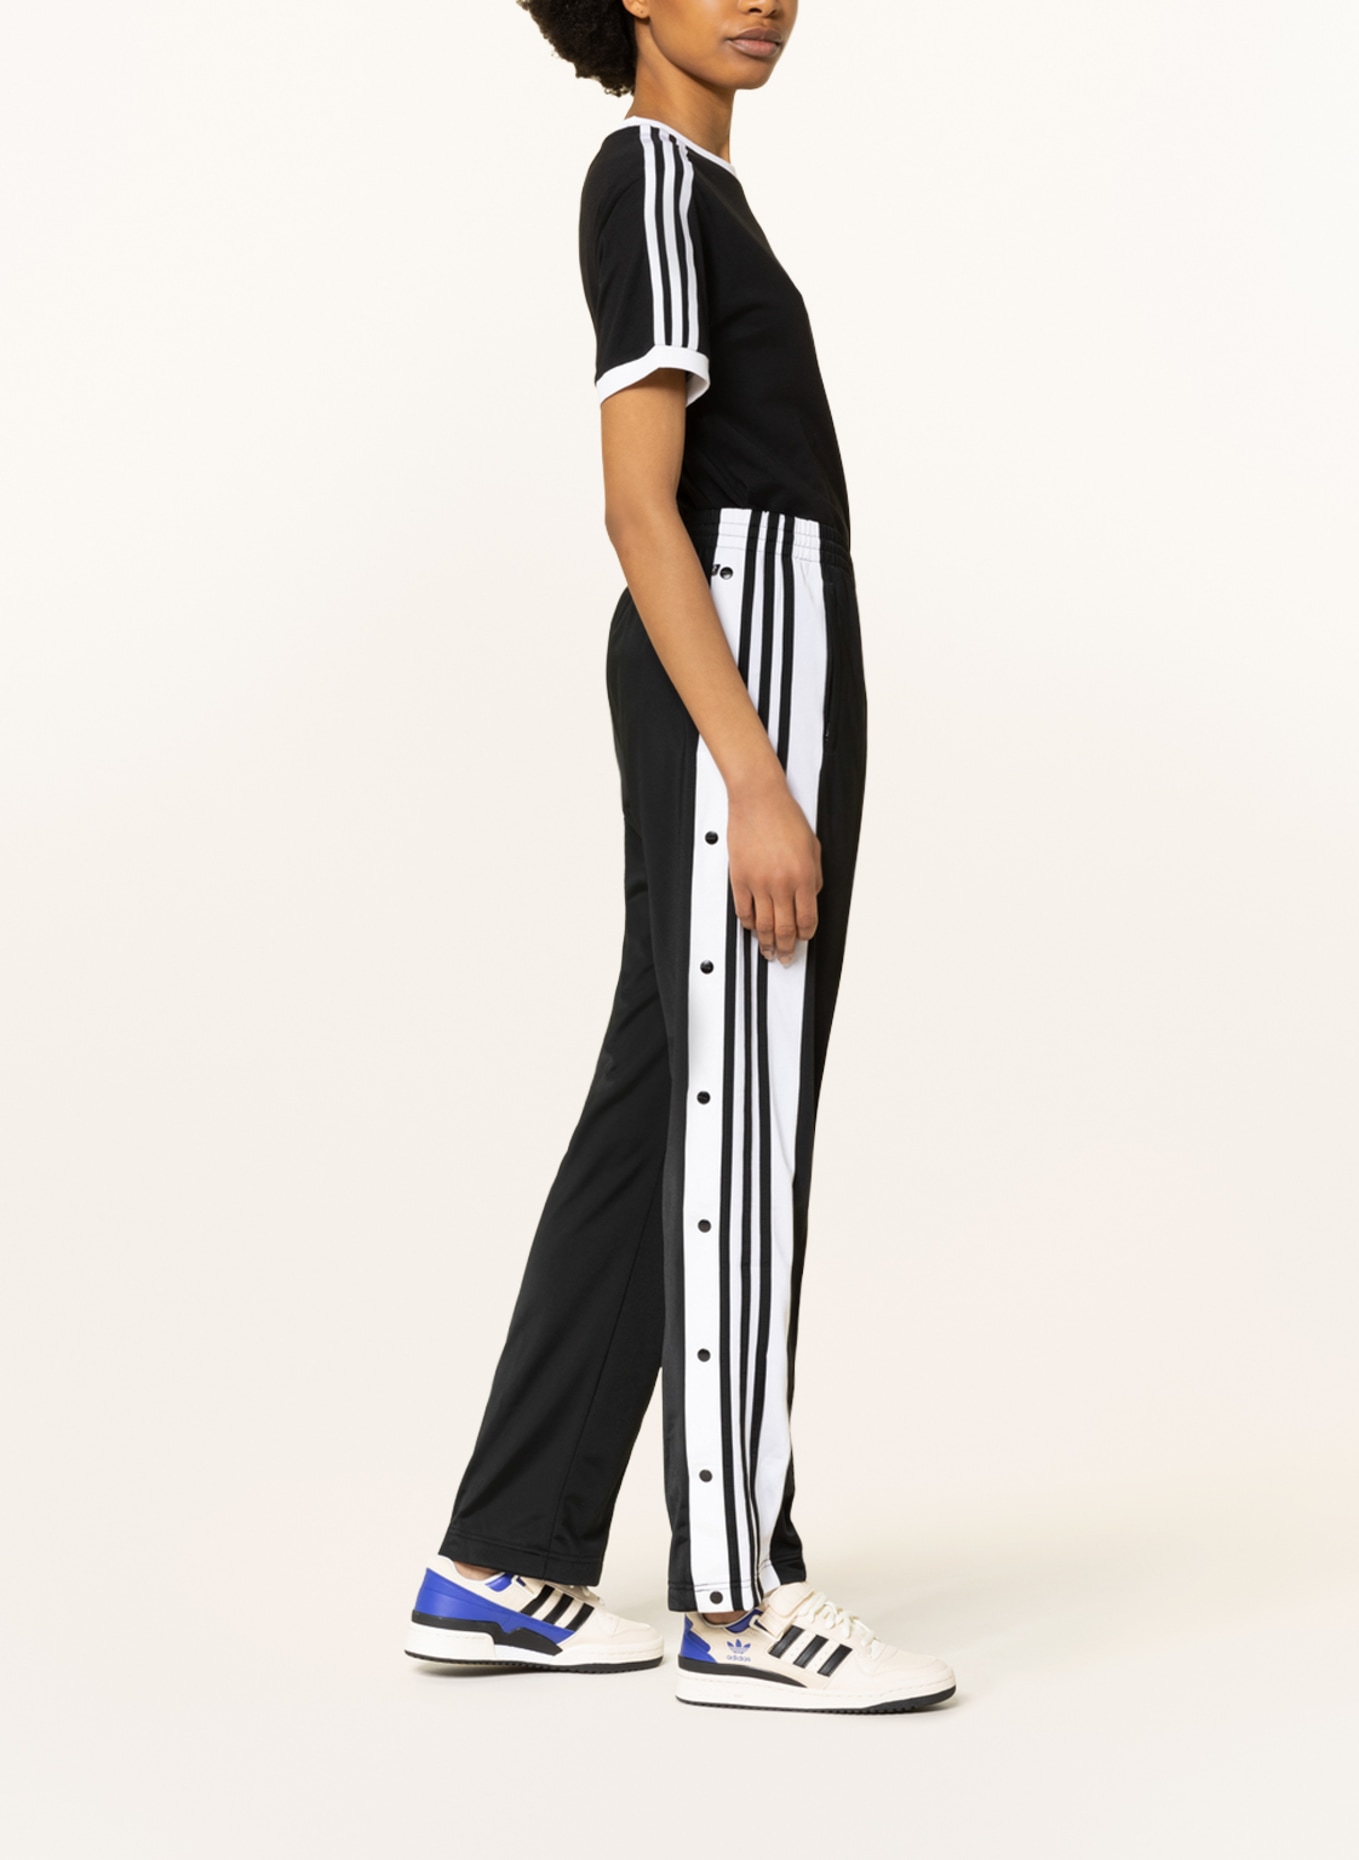 adidas Originals Track pants ADIBREAK with tuxedo stripes in black/ white